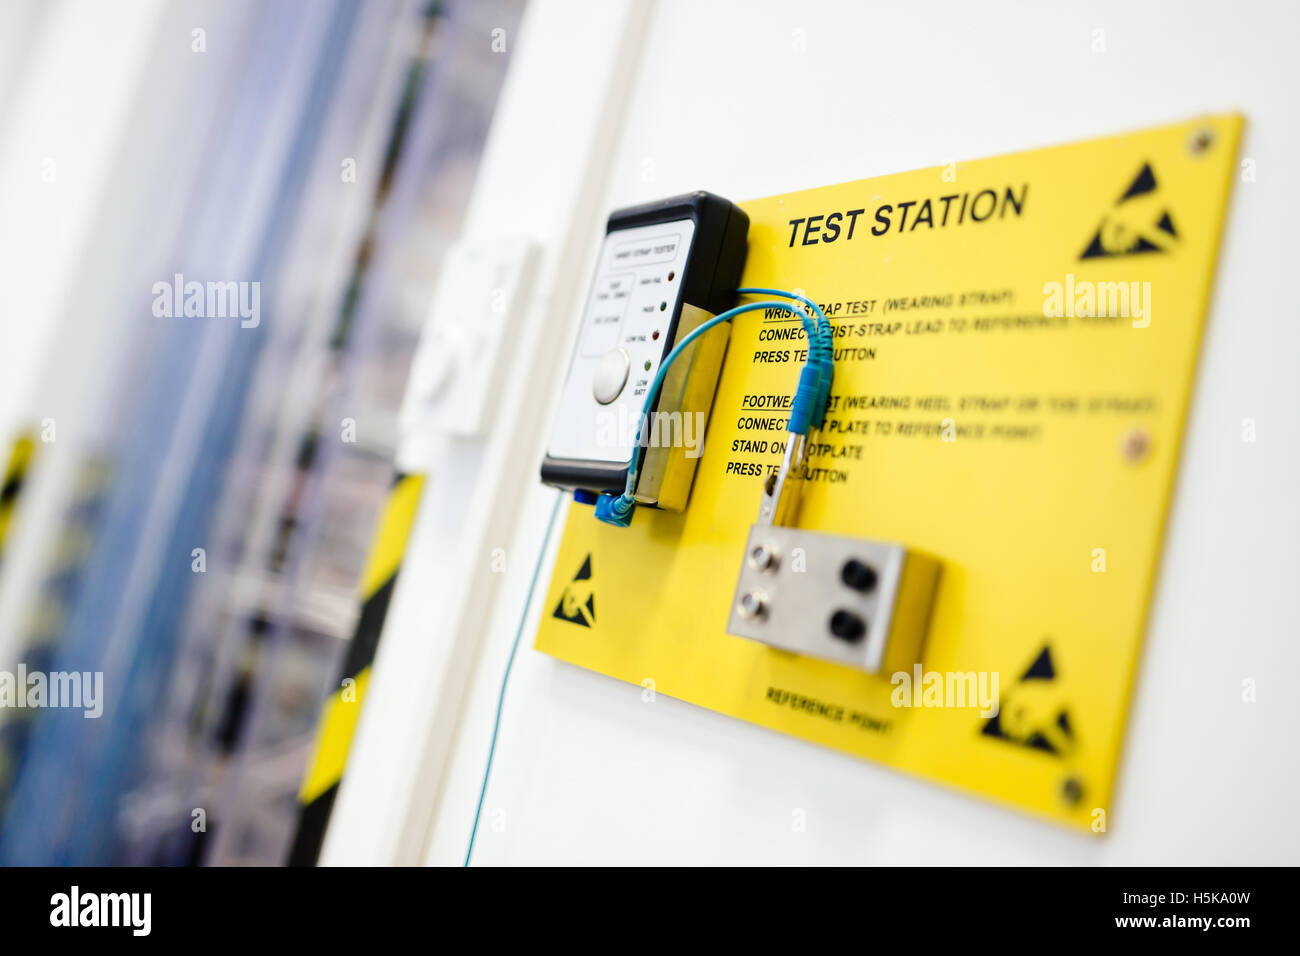 Wrist strap test station in hardware labaratory Stock Photo